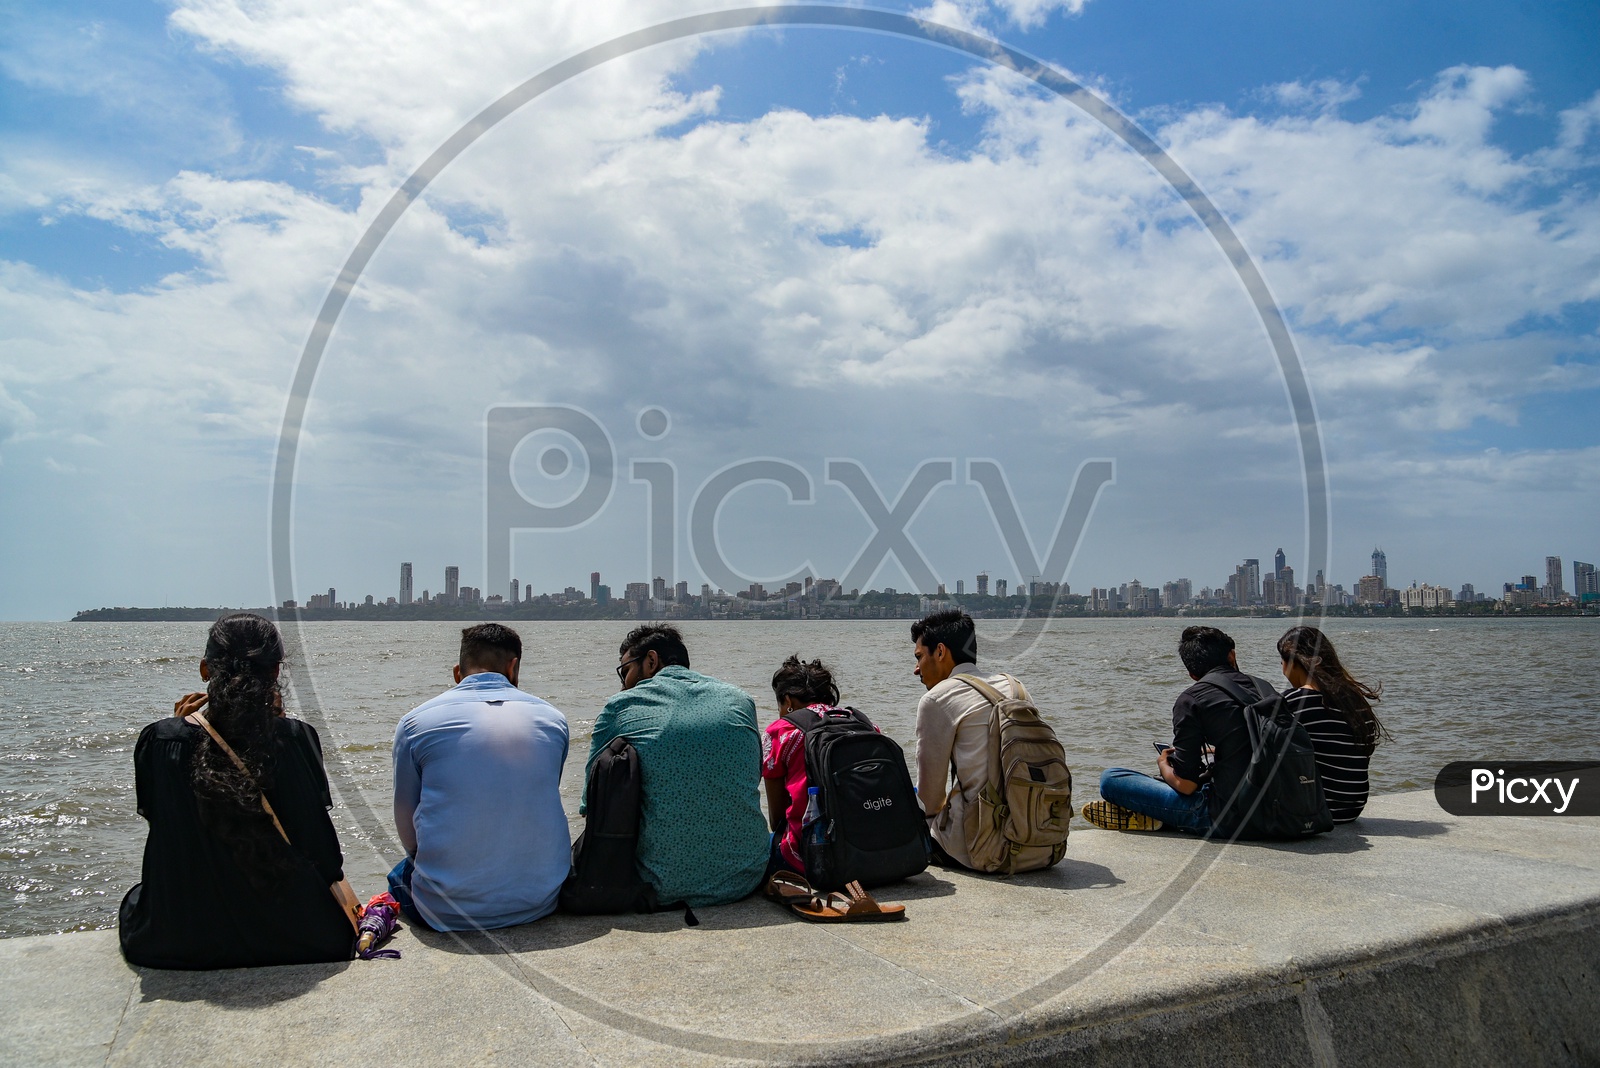 Students enjoying the view at Marine Drive in Mumbai